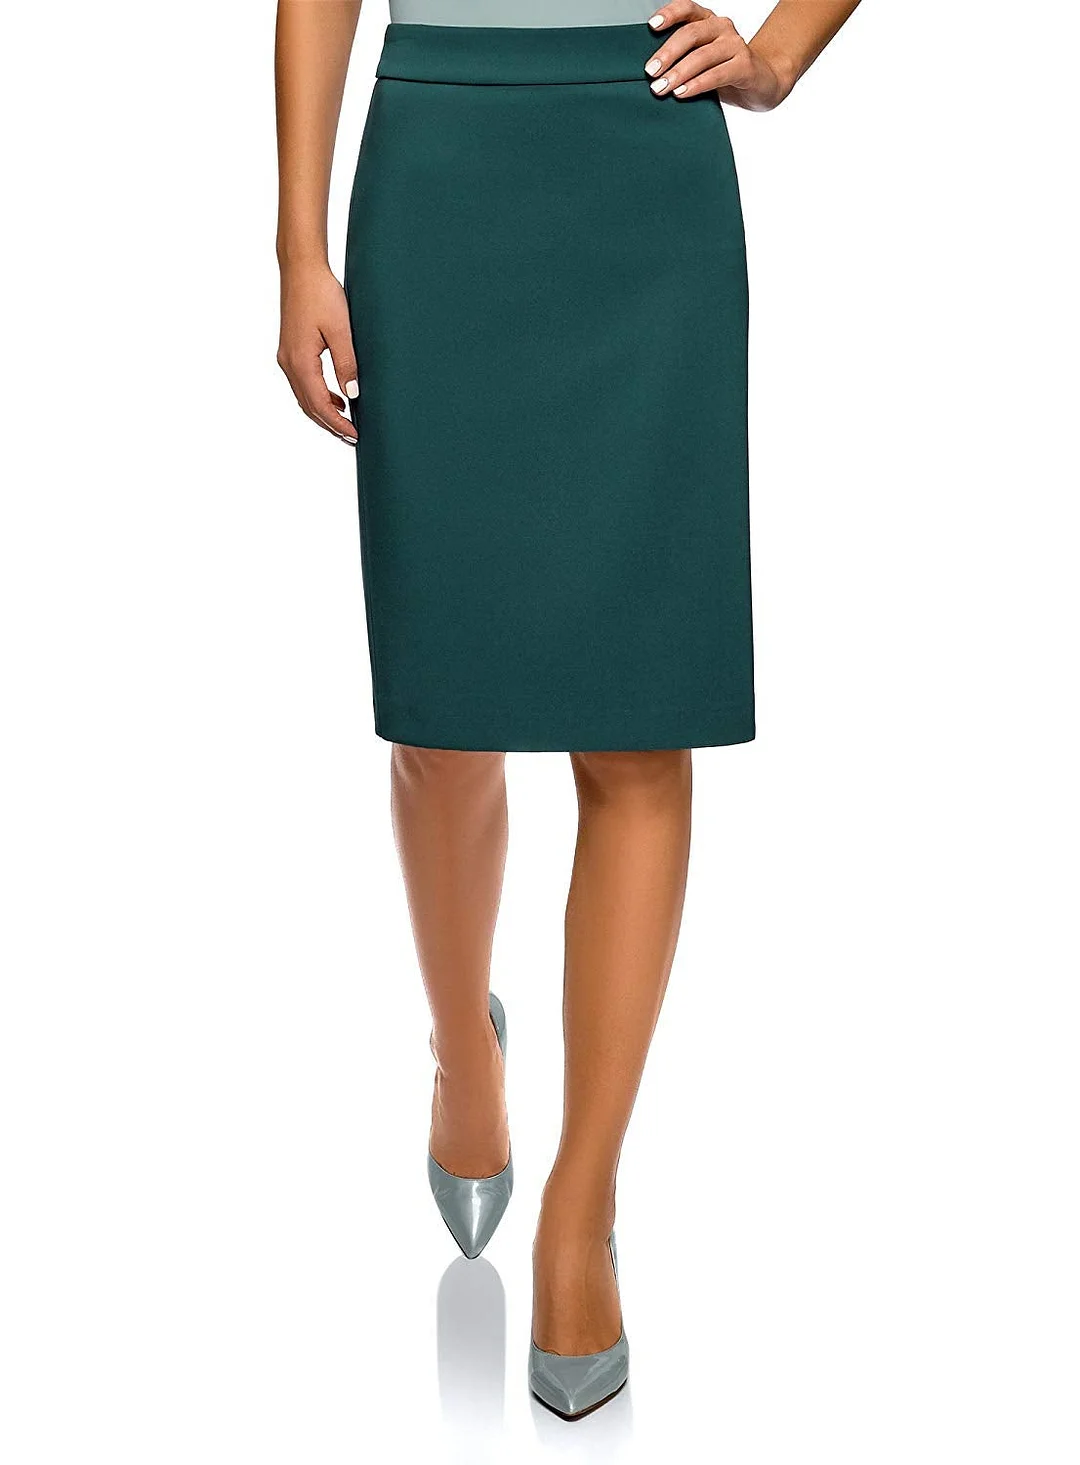 Rise skirt with exposed back zipper Collection Women's Basic Straight Skirt